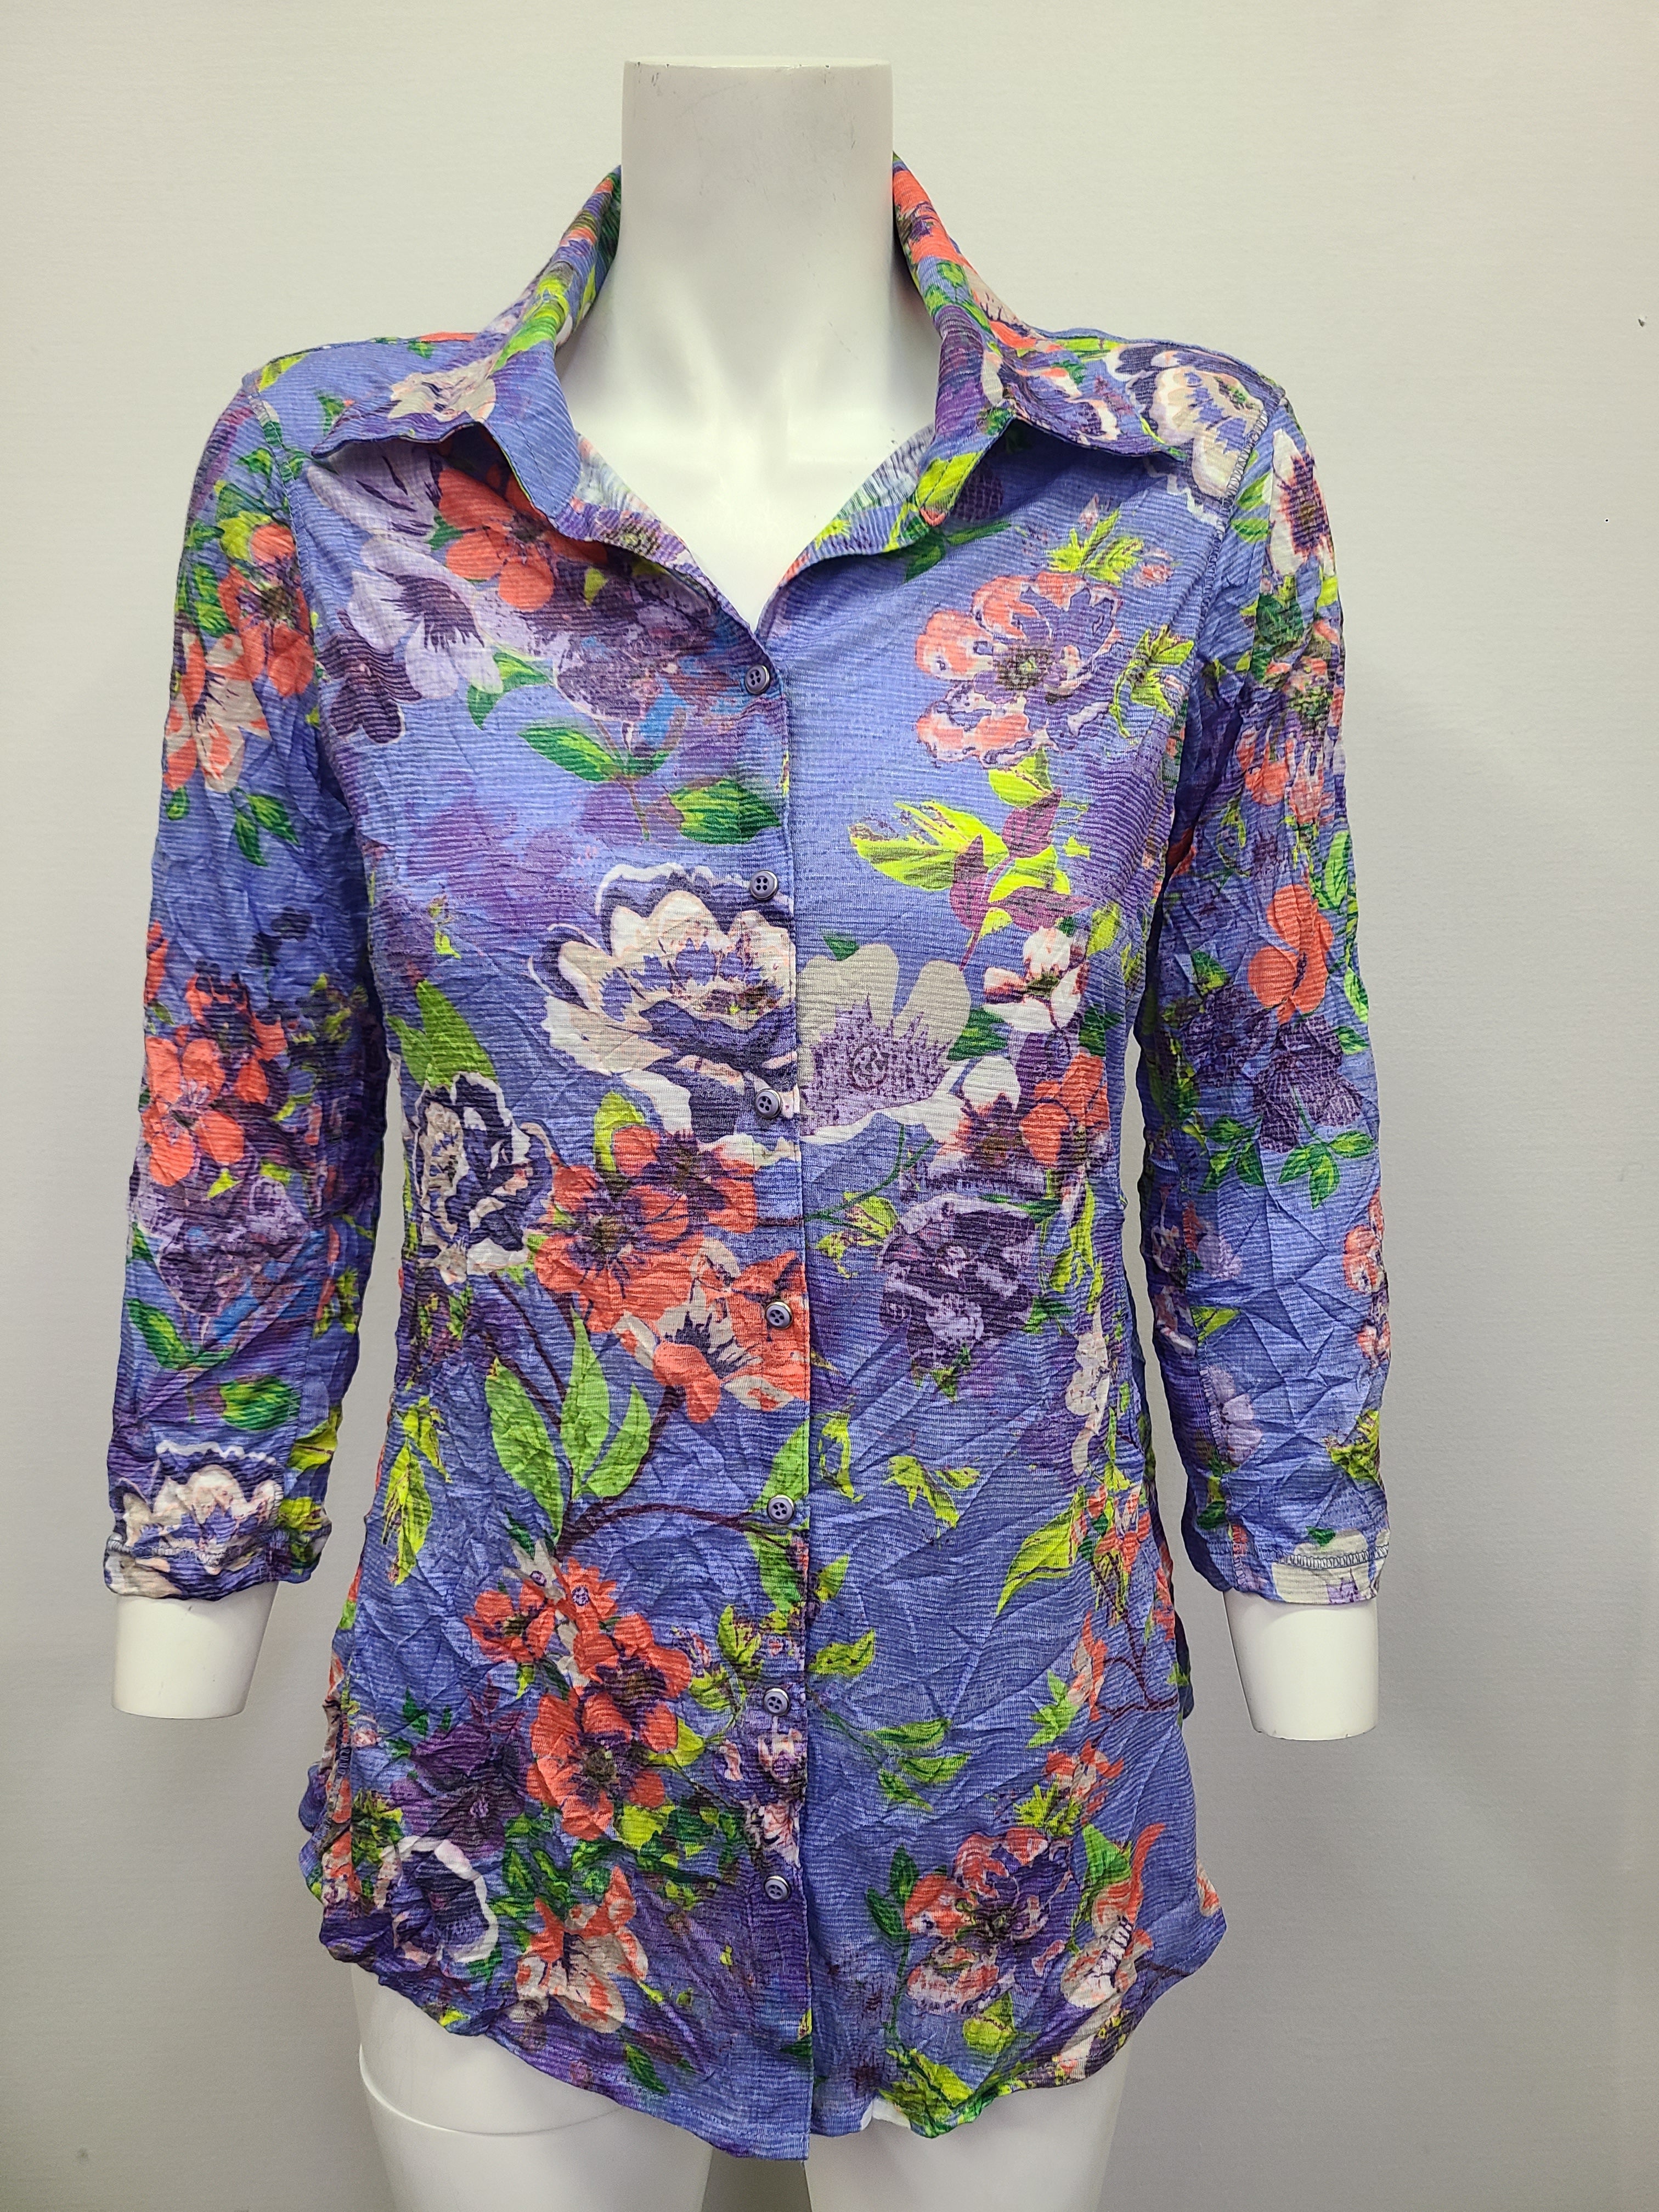 David Cline Floral Print Crinkle Shirt